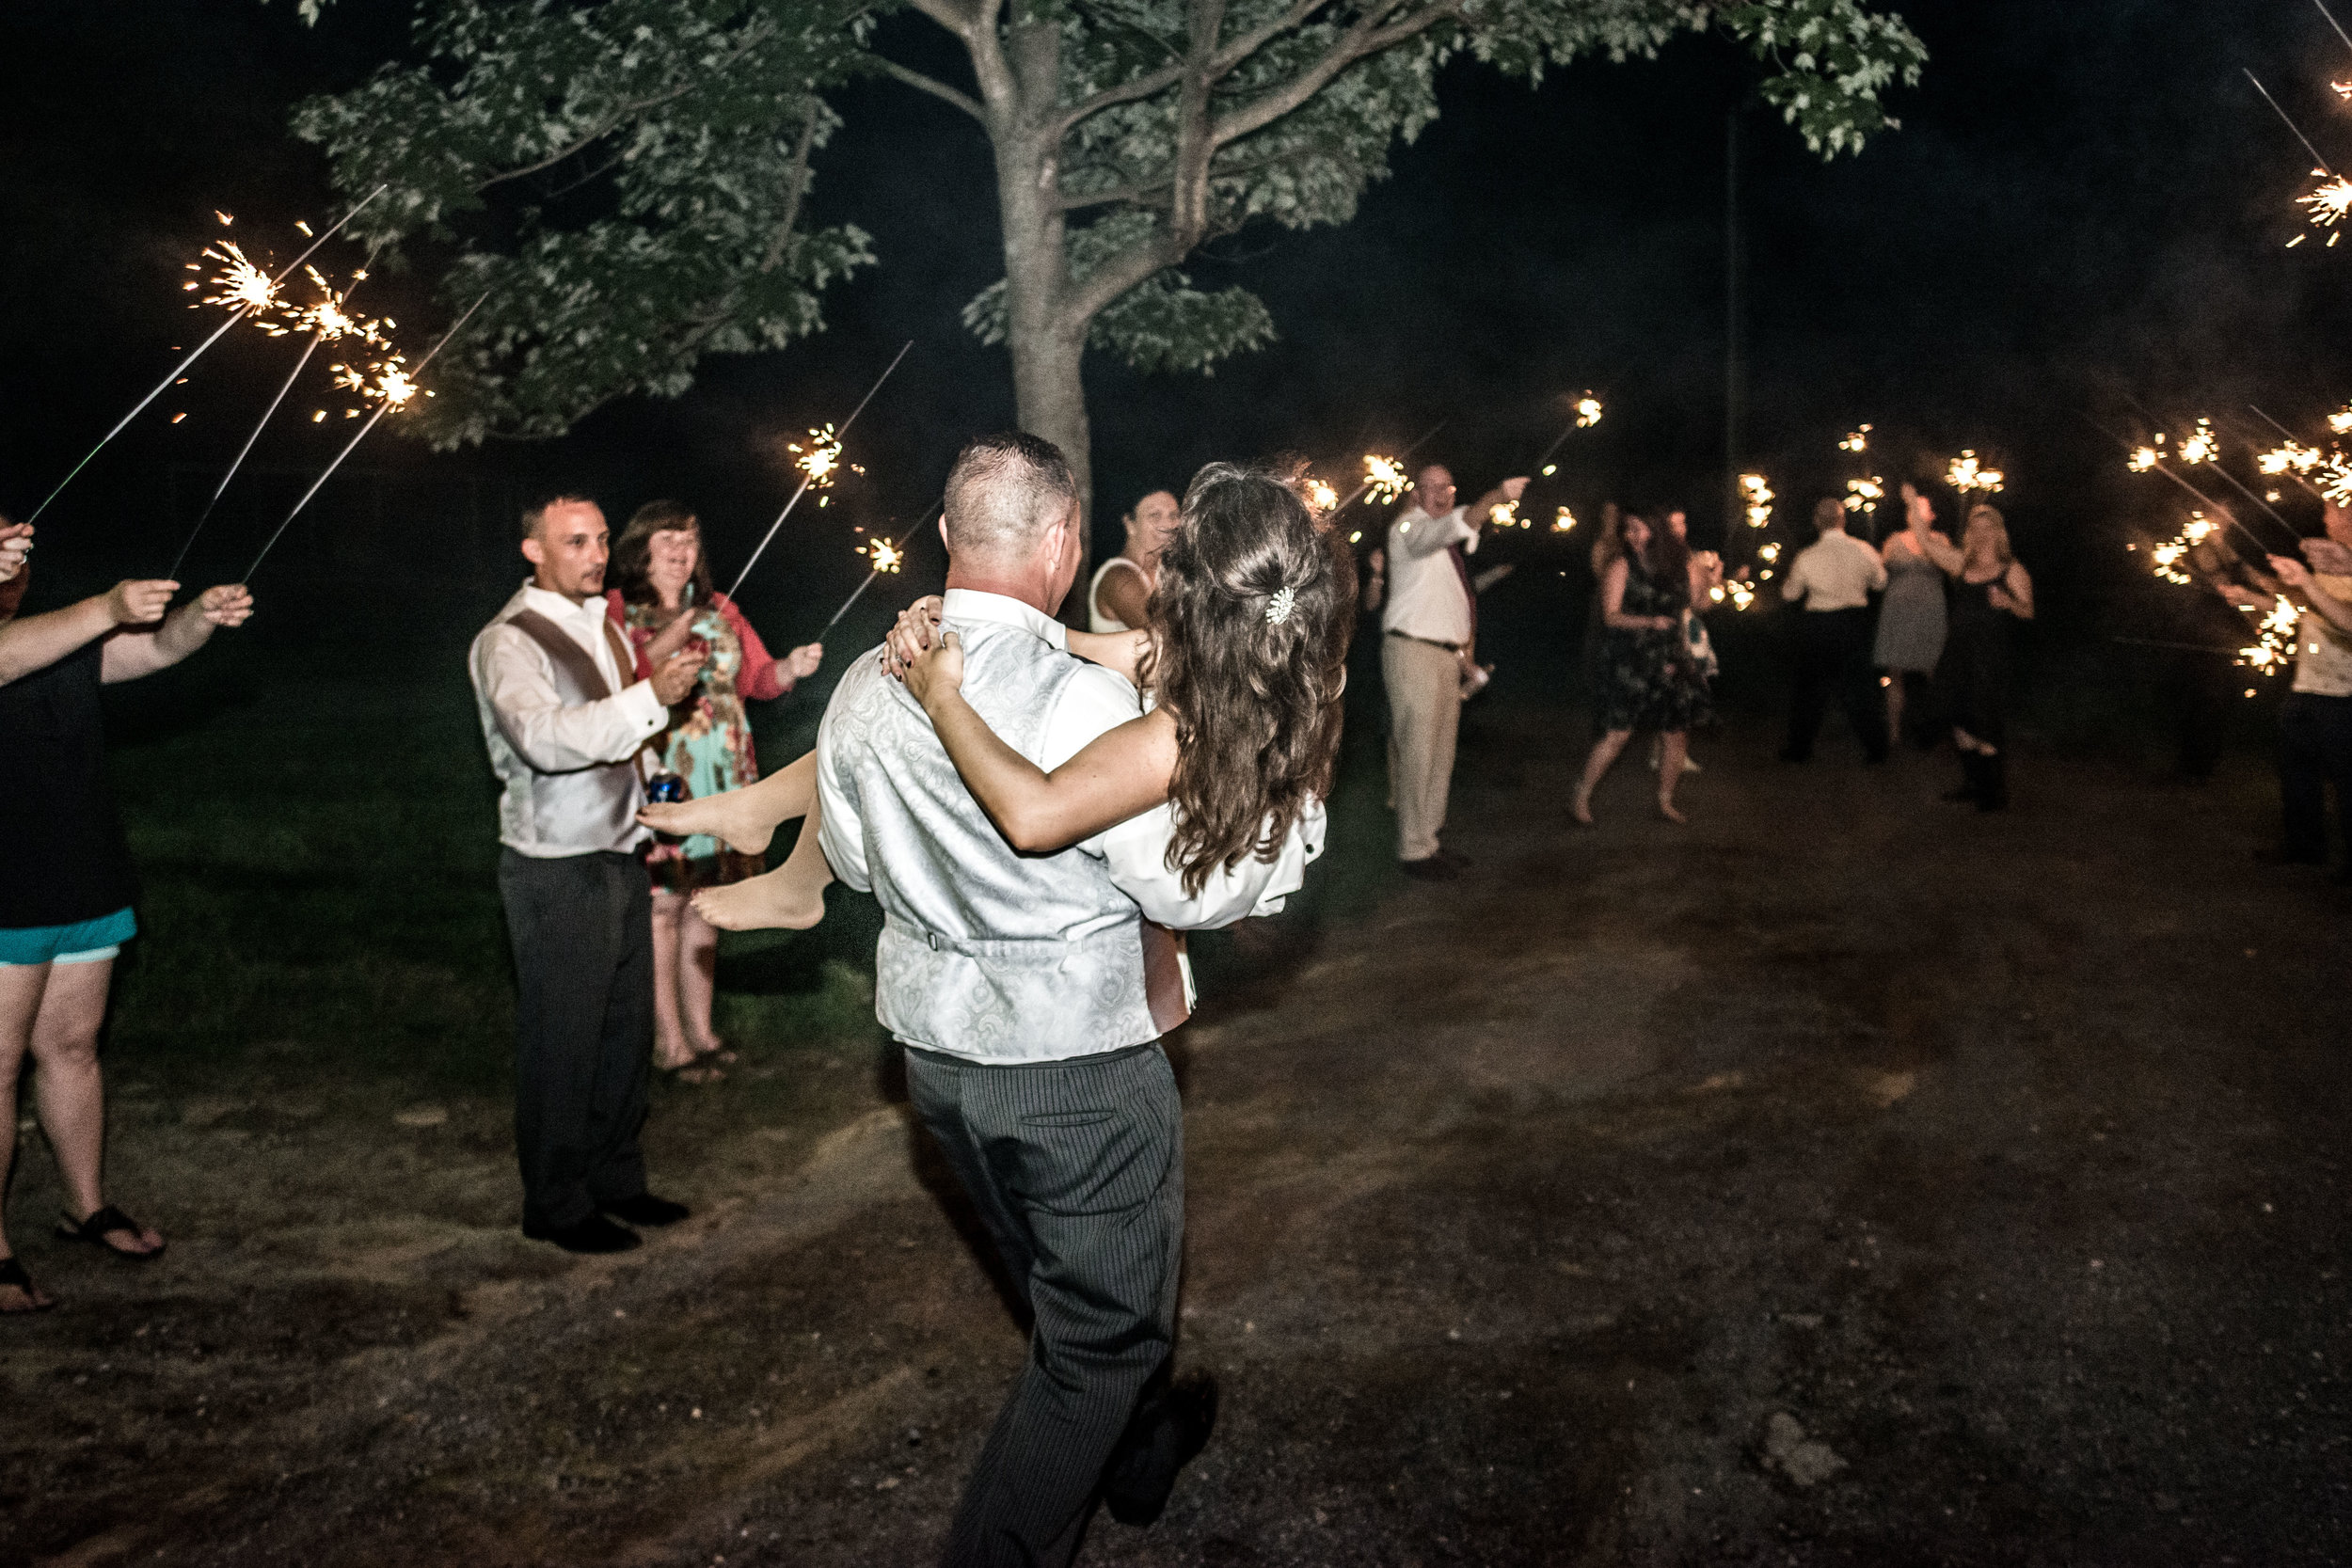 2018.06.22 Hardy-Baty Wedding Weekend in the Virginia Countryside-264.jpg